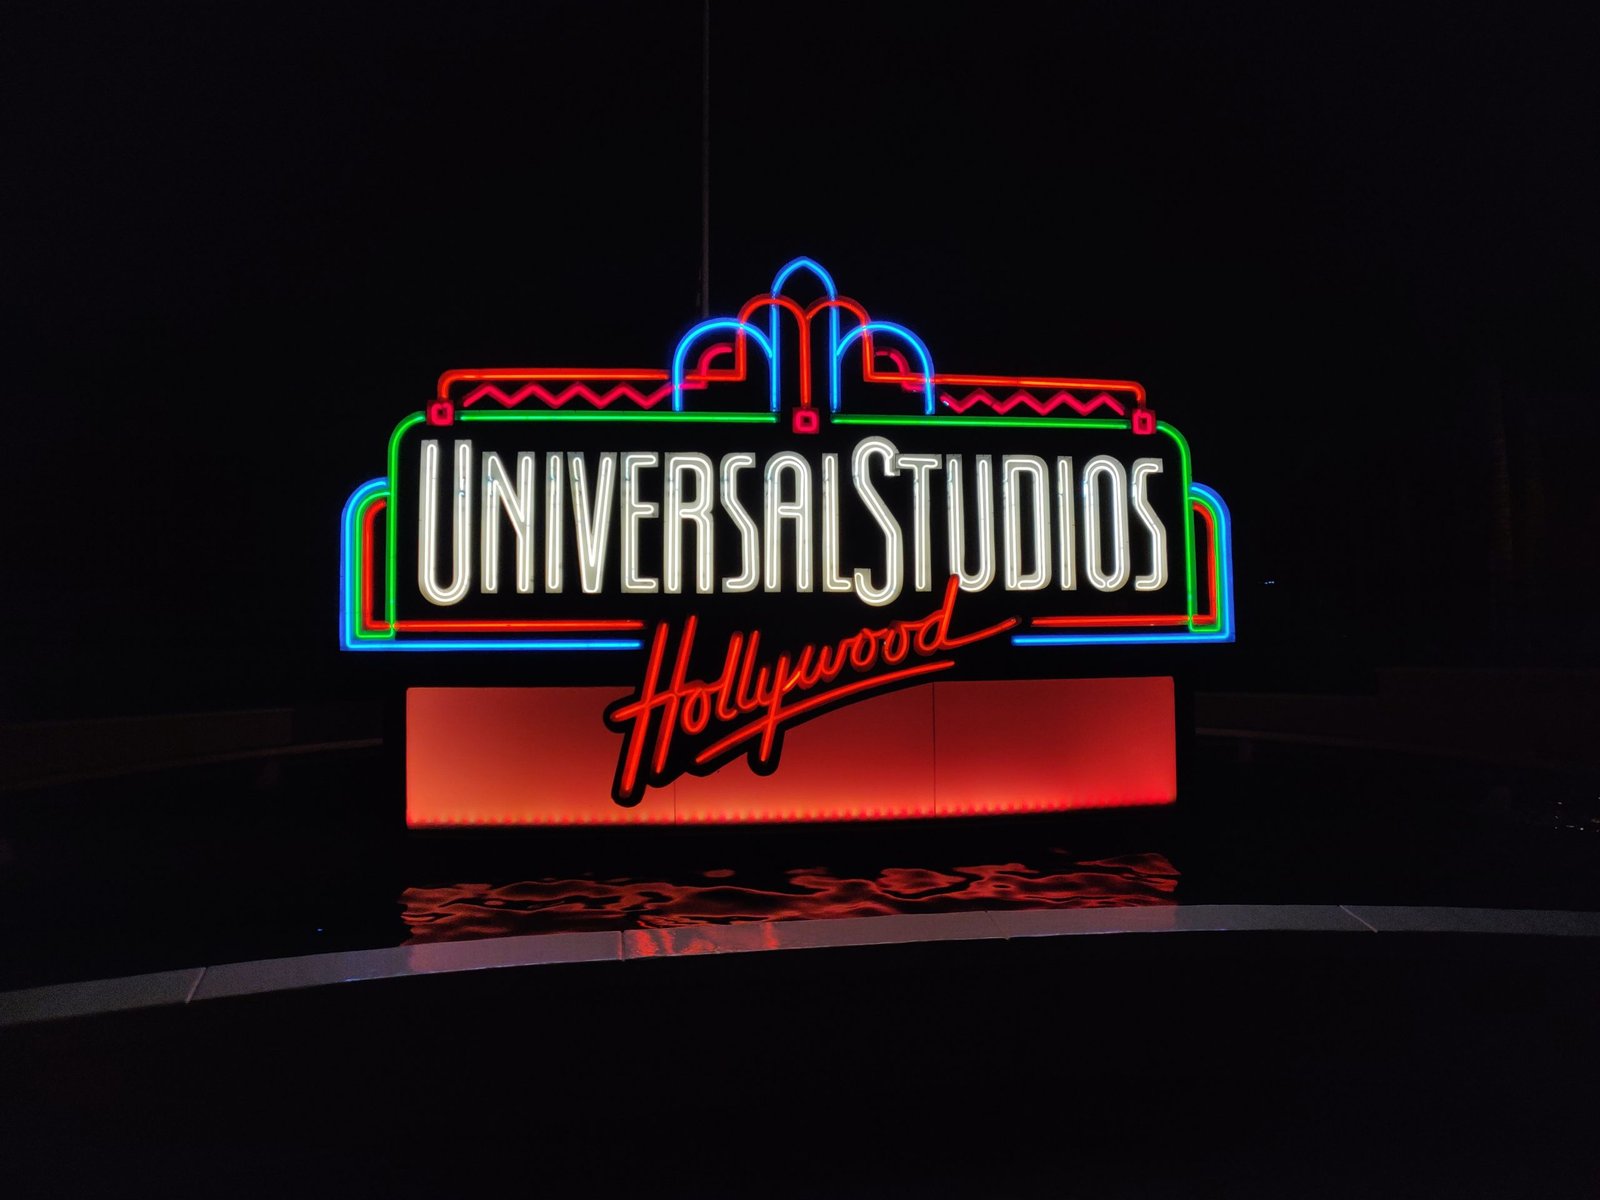 Universal Studios Hollywood photos